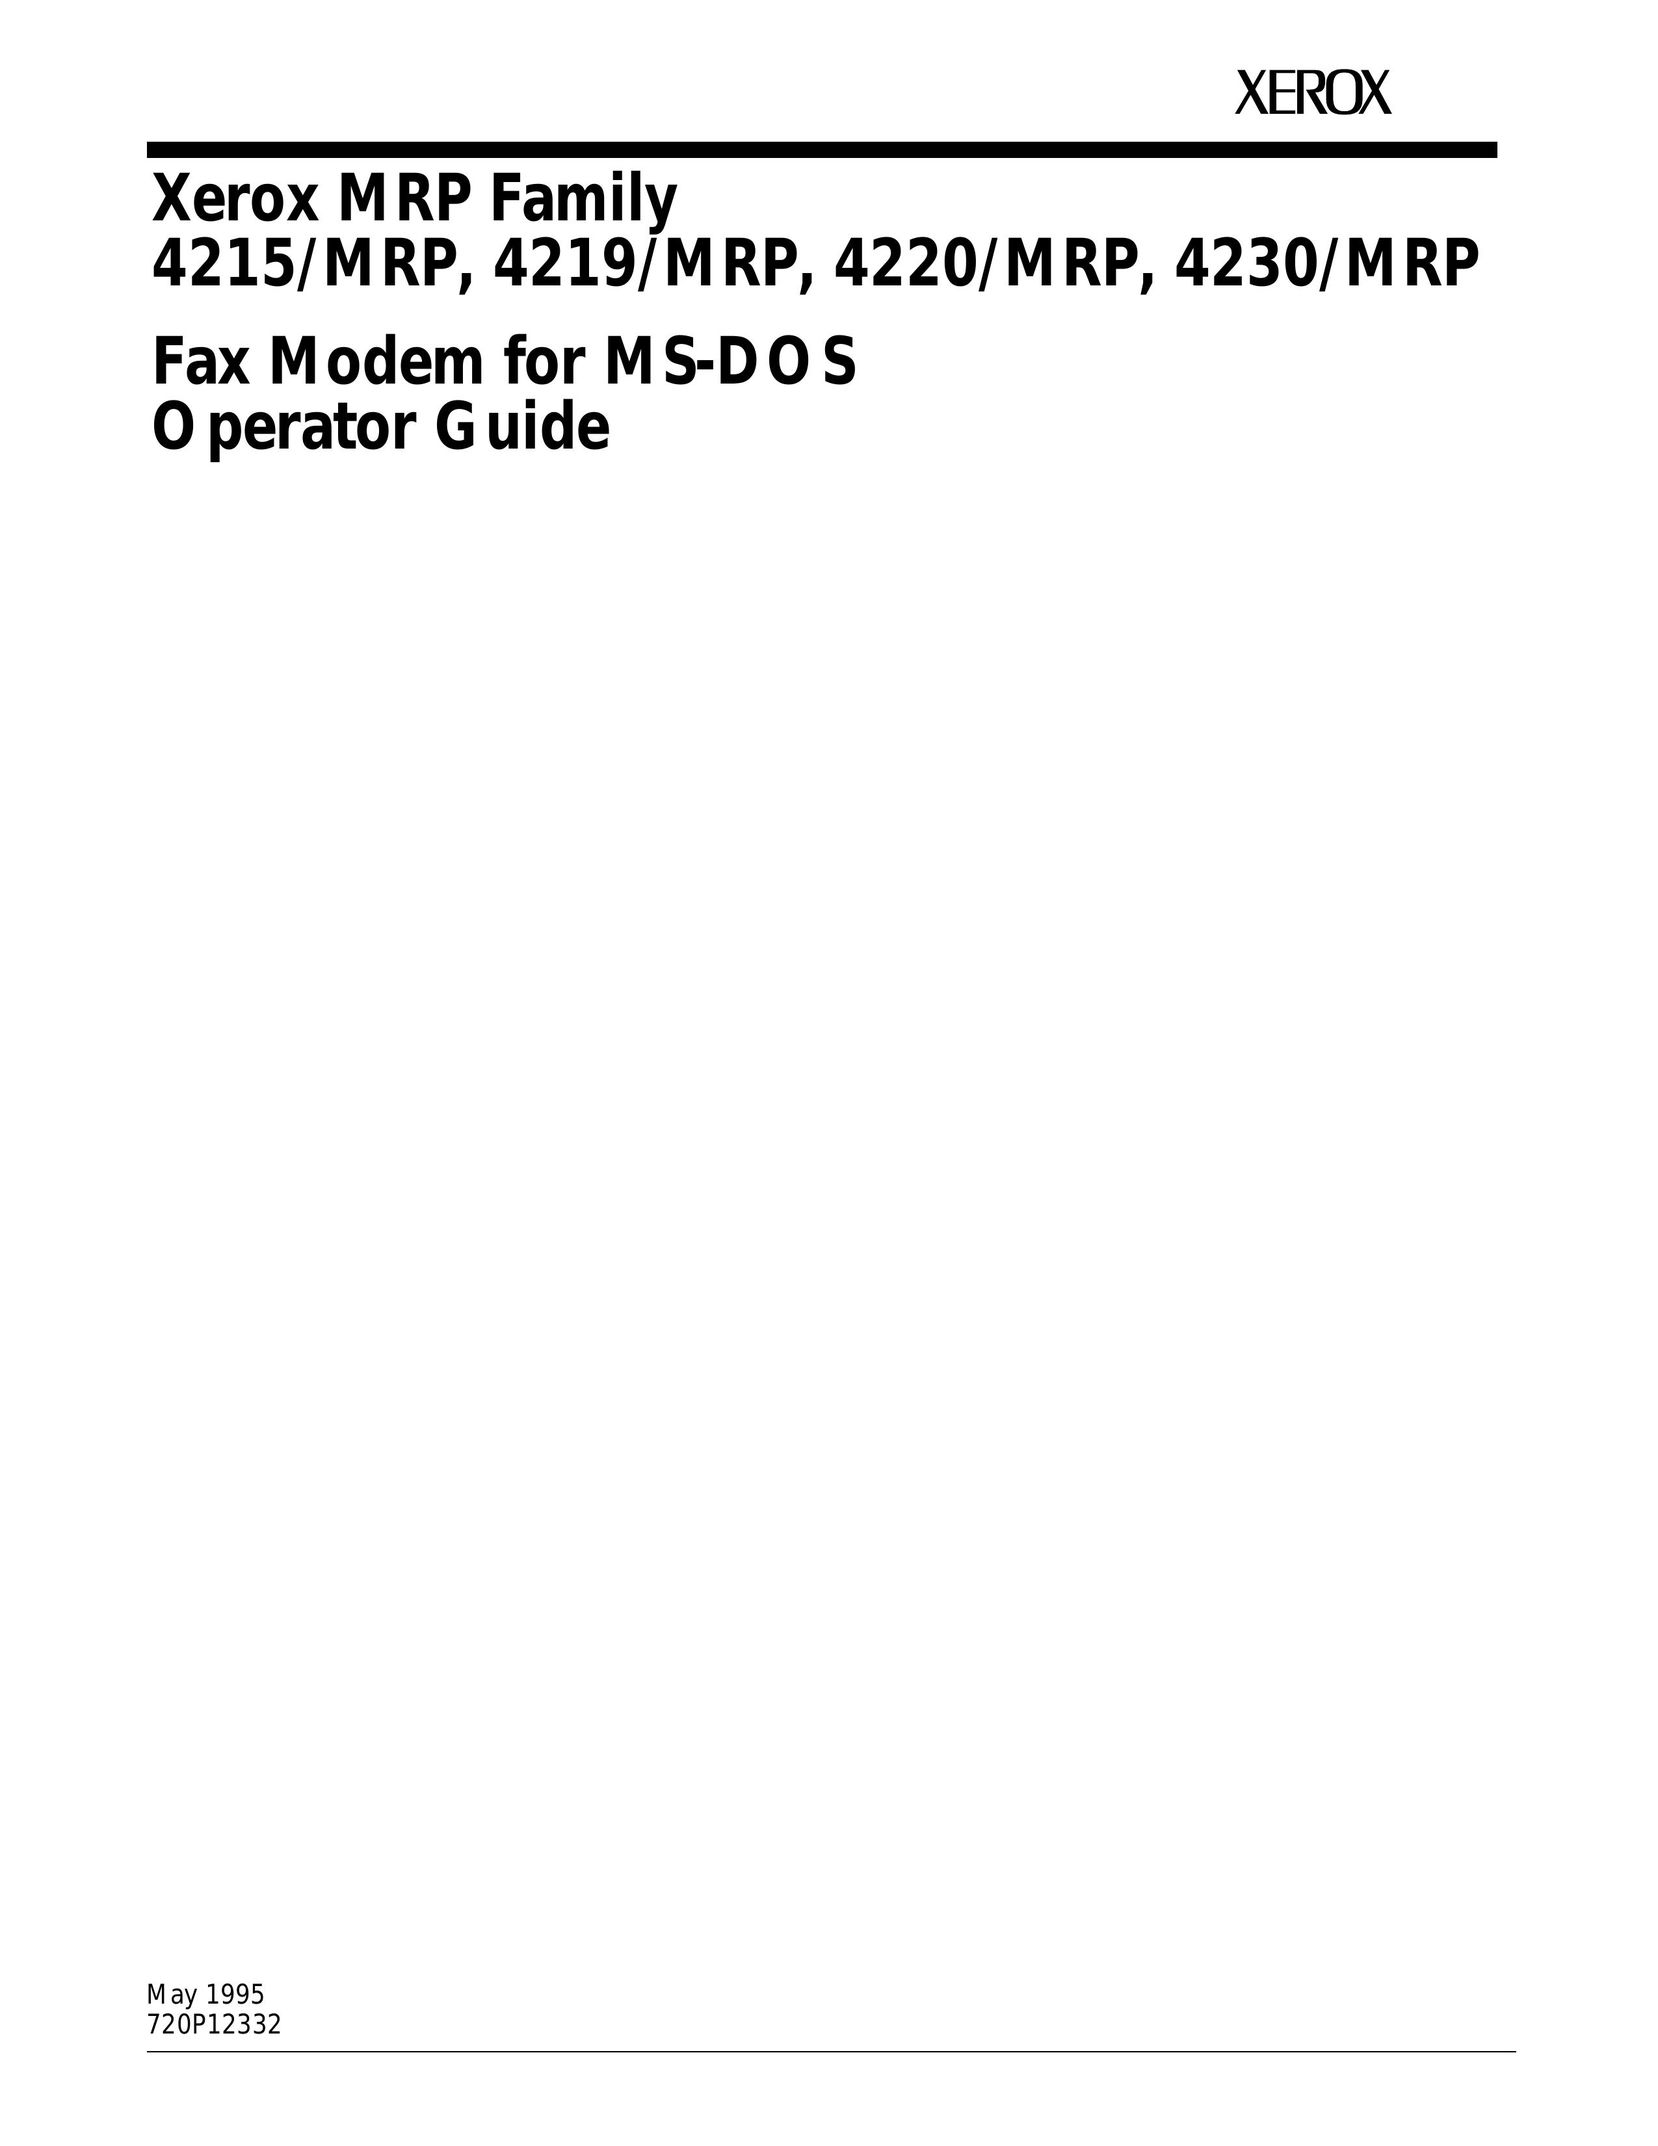 Xerox 4219/MRP Modem User Manual